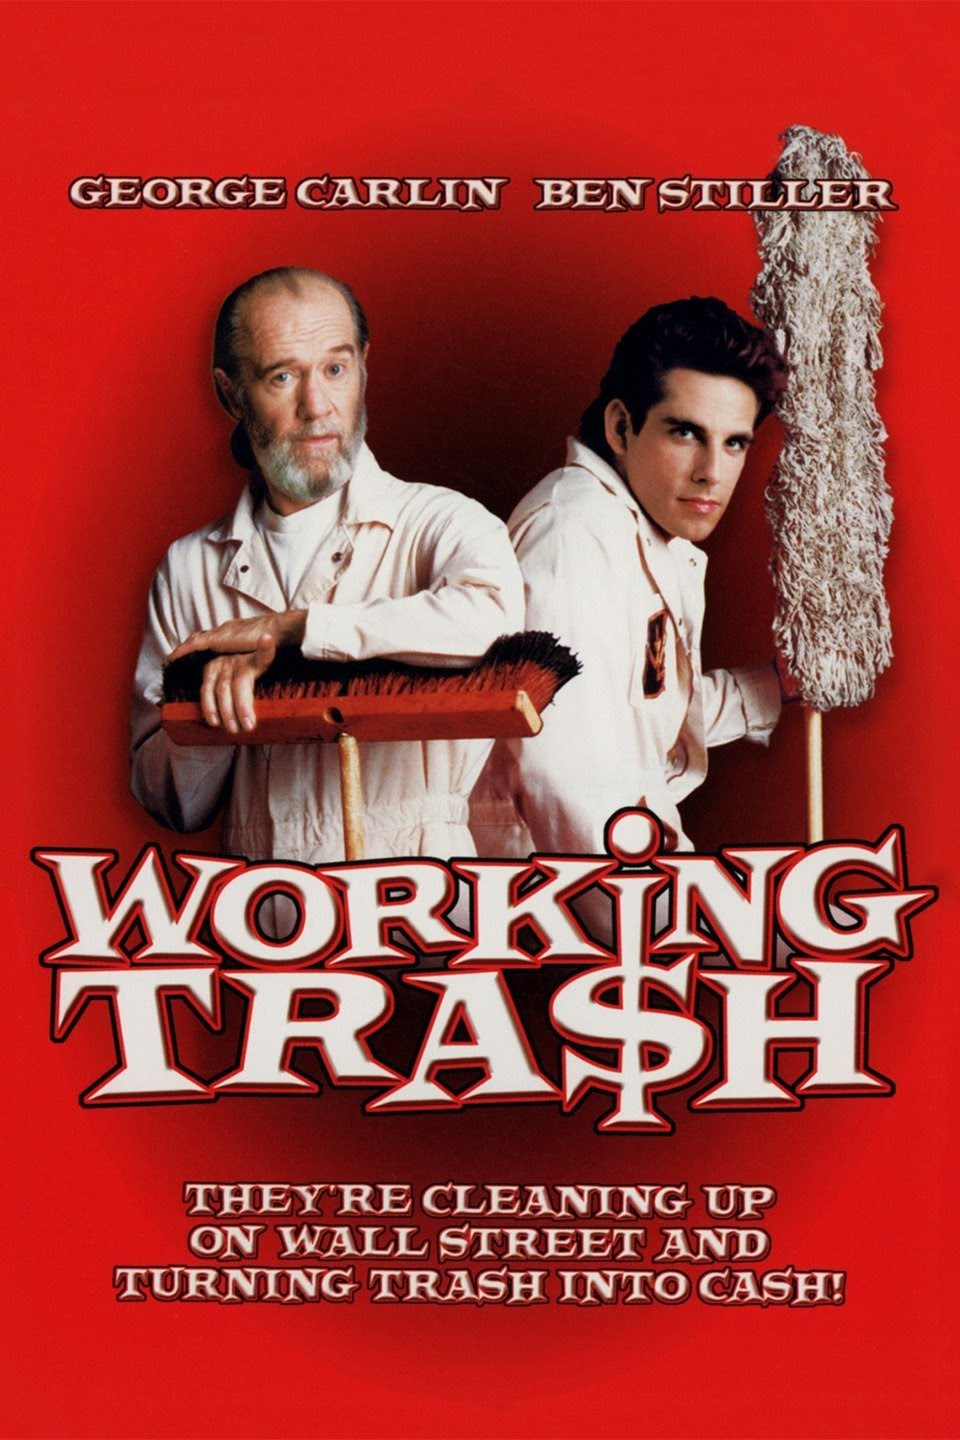 Working Tra$h Dvd (1990)